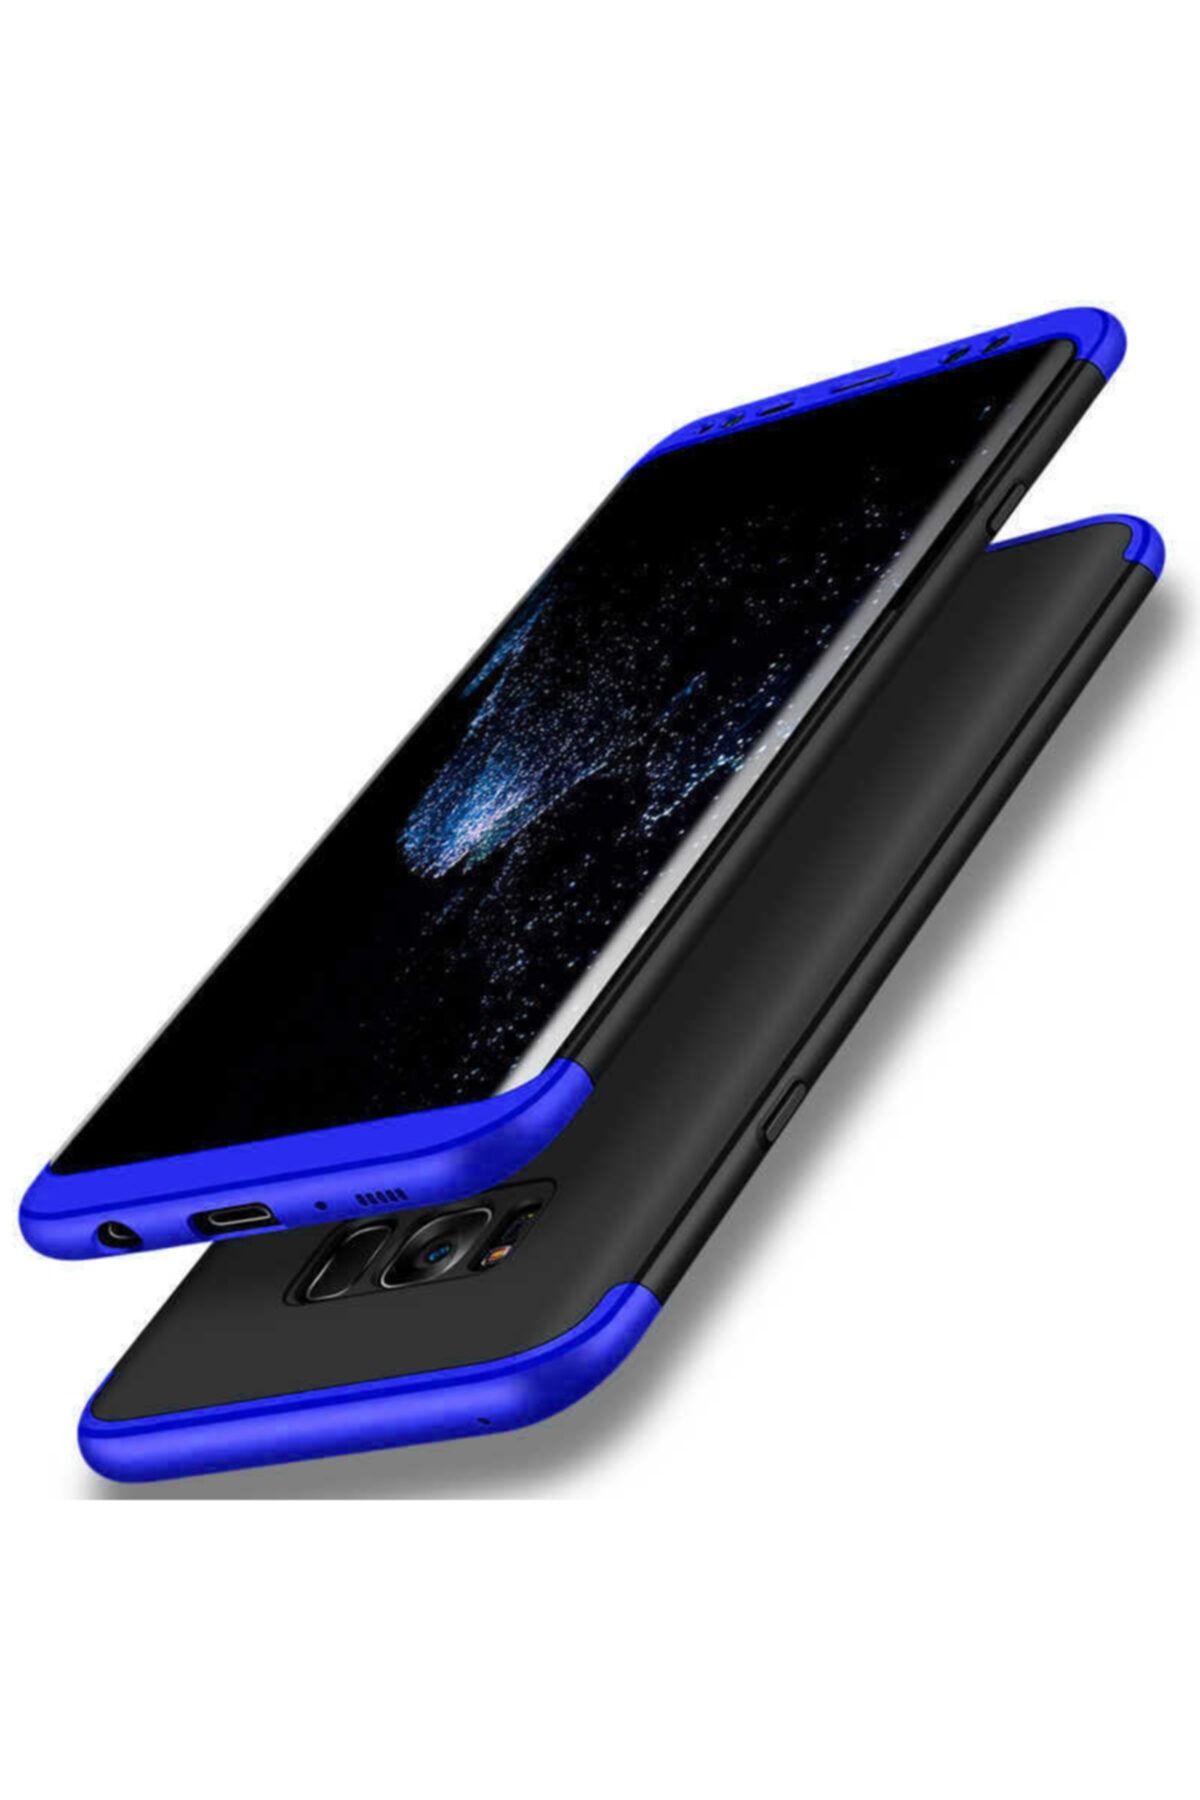 Nezih Case Samsung Galaxy S8 Uyumlu Tam Koruma Sert Silikon Kılıf (ULTRA İNCE) Siyah/mavi